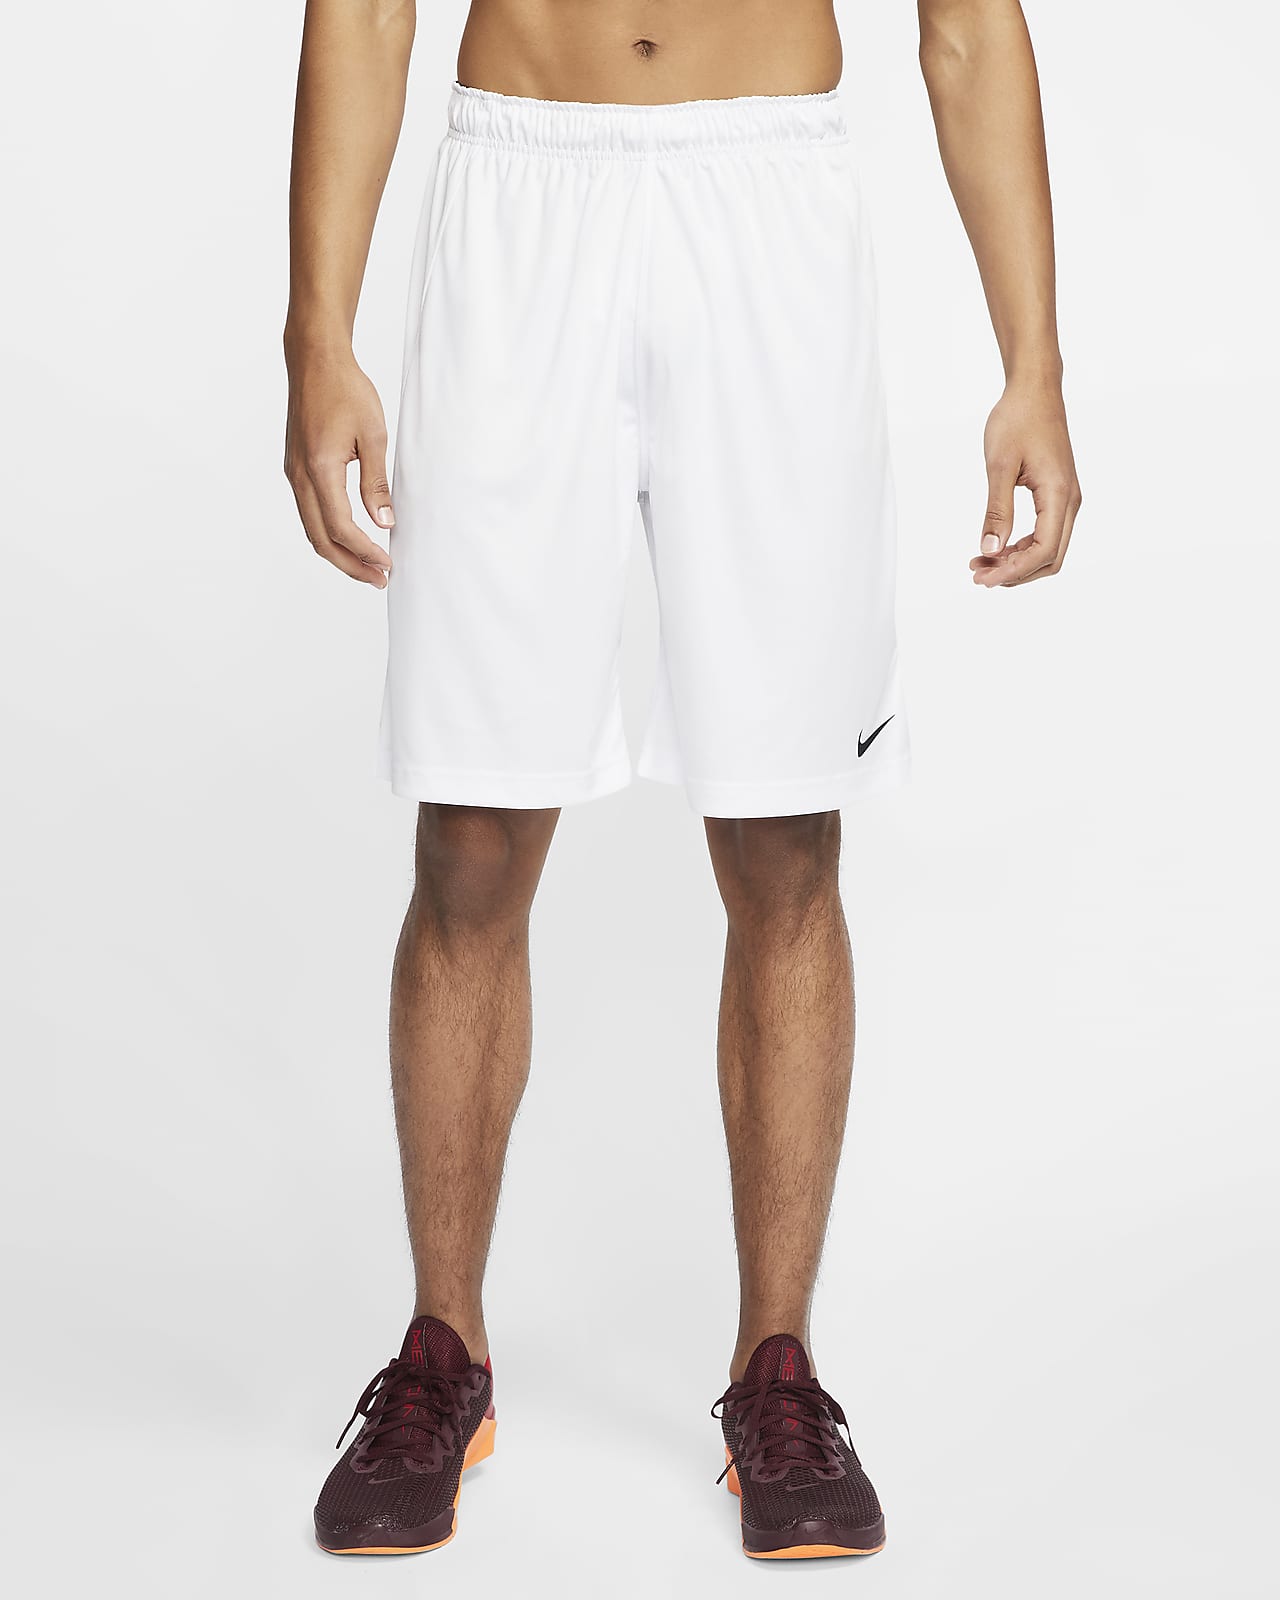 Nike Dri-FIT Men's Football Shorts